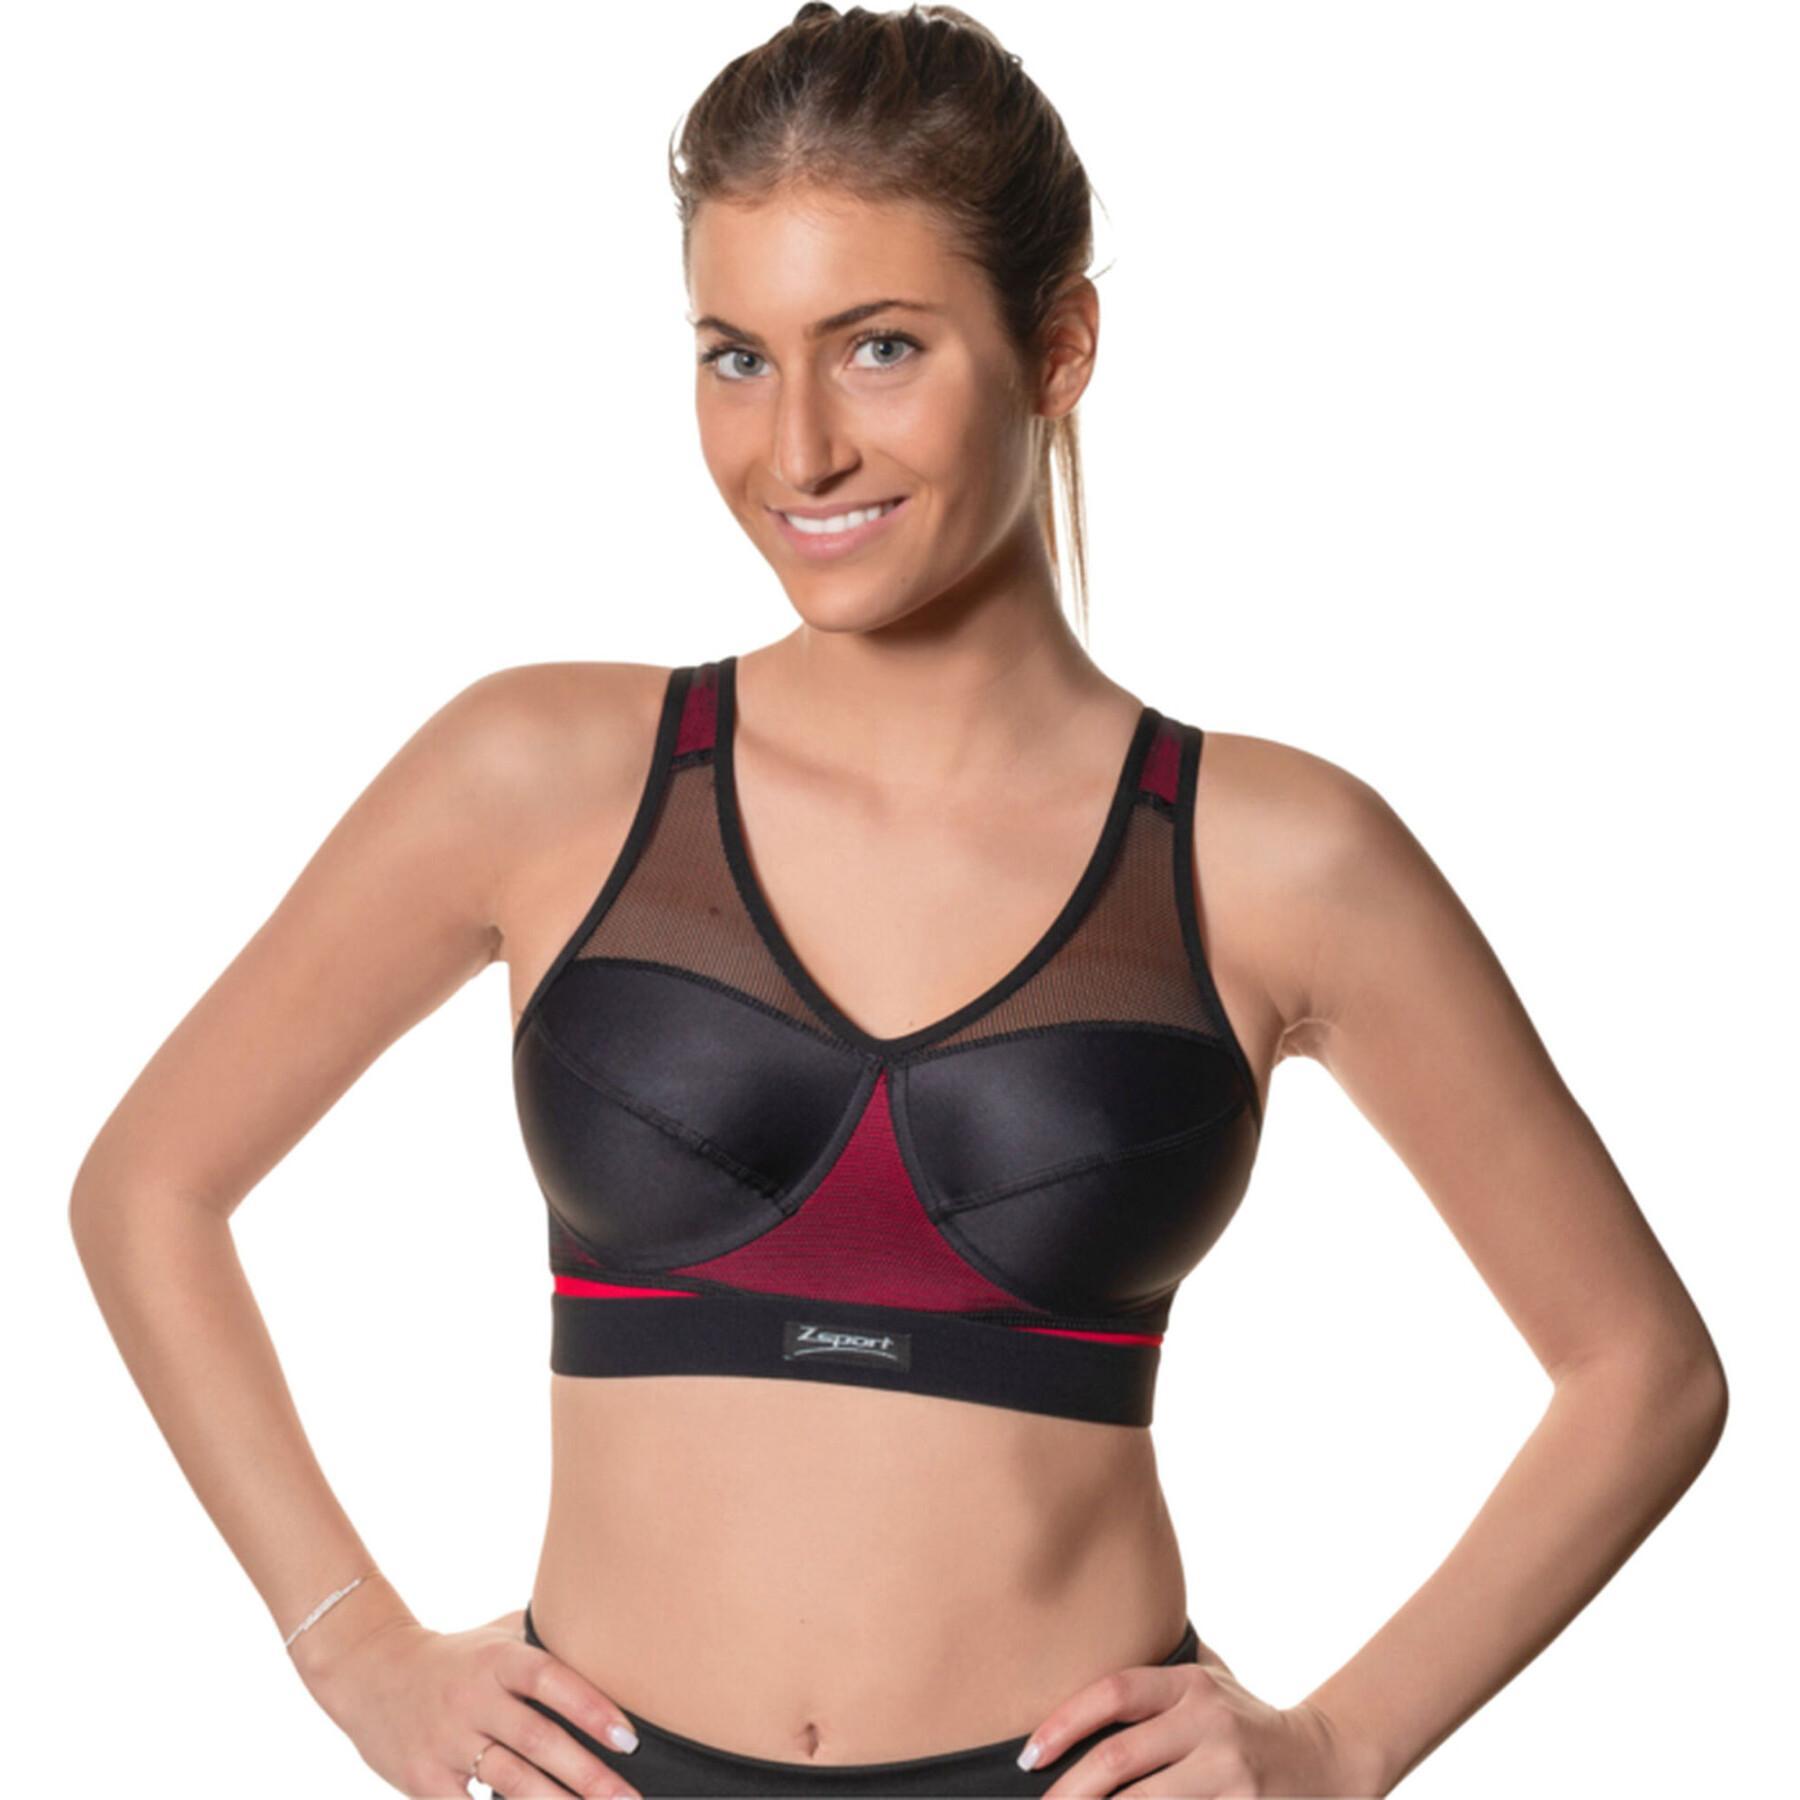 Women's bra ZSport Fitline Vitality - Bras - Women's clothing